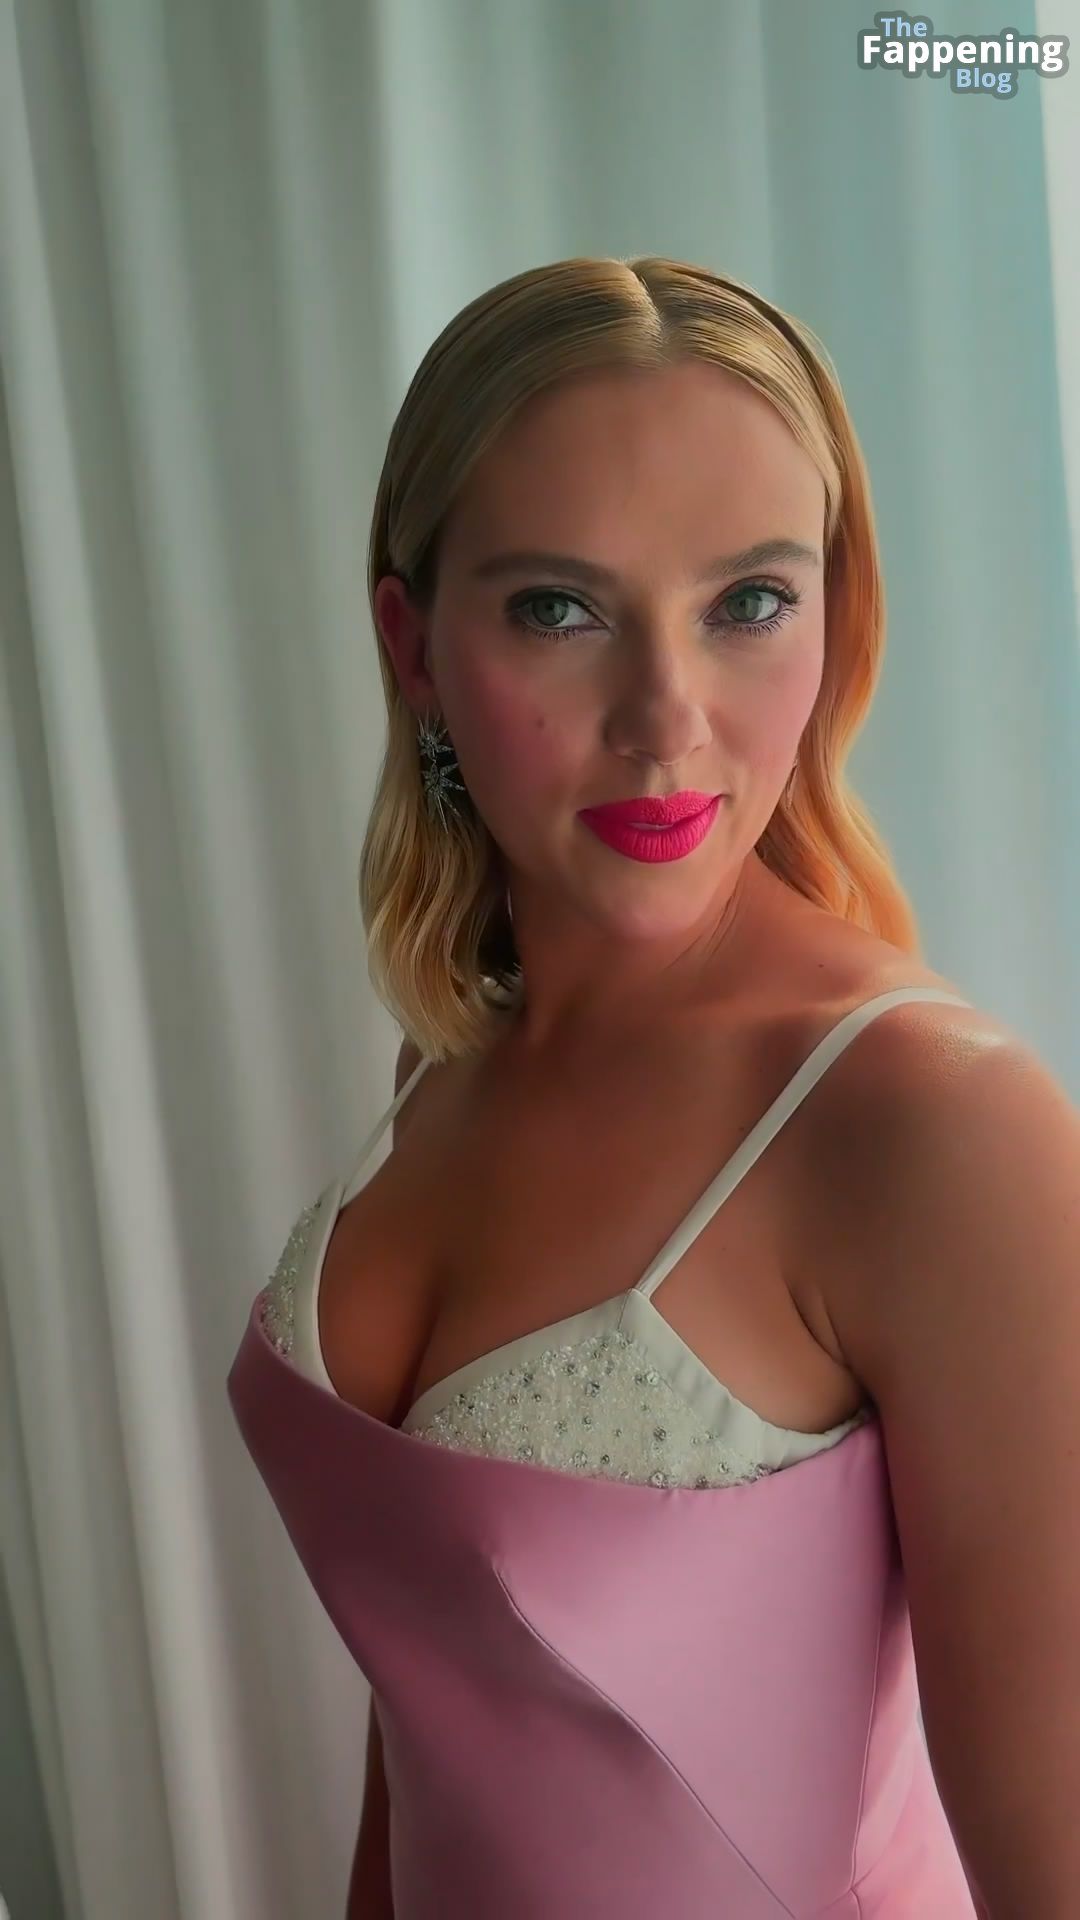 Scarlett-Johansson-Sexy-The-Fappening-Blog-29.jpg